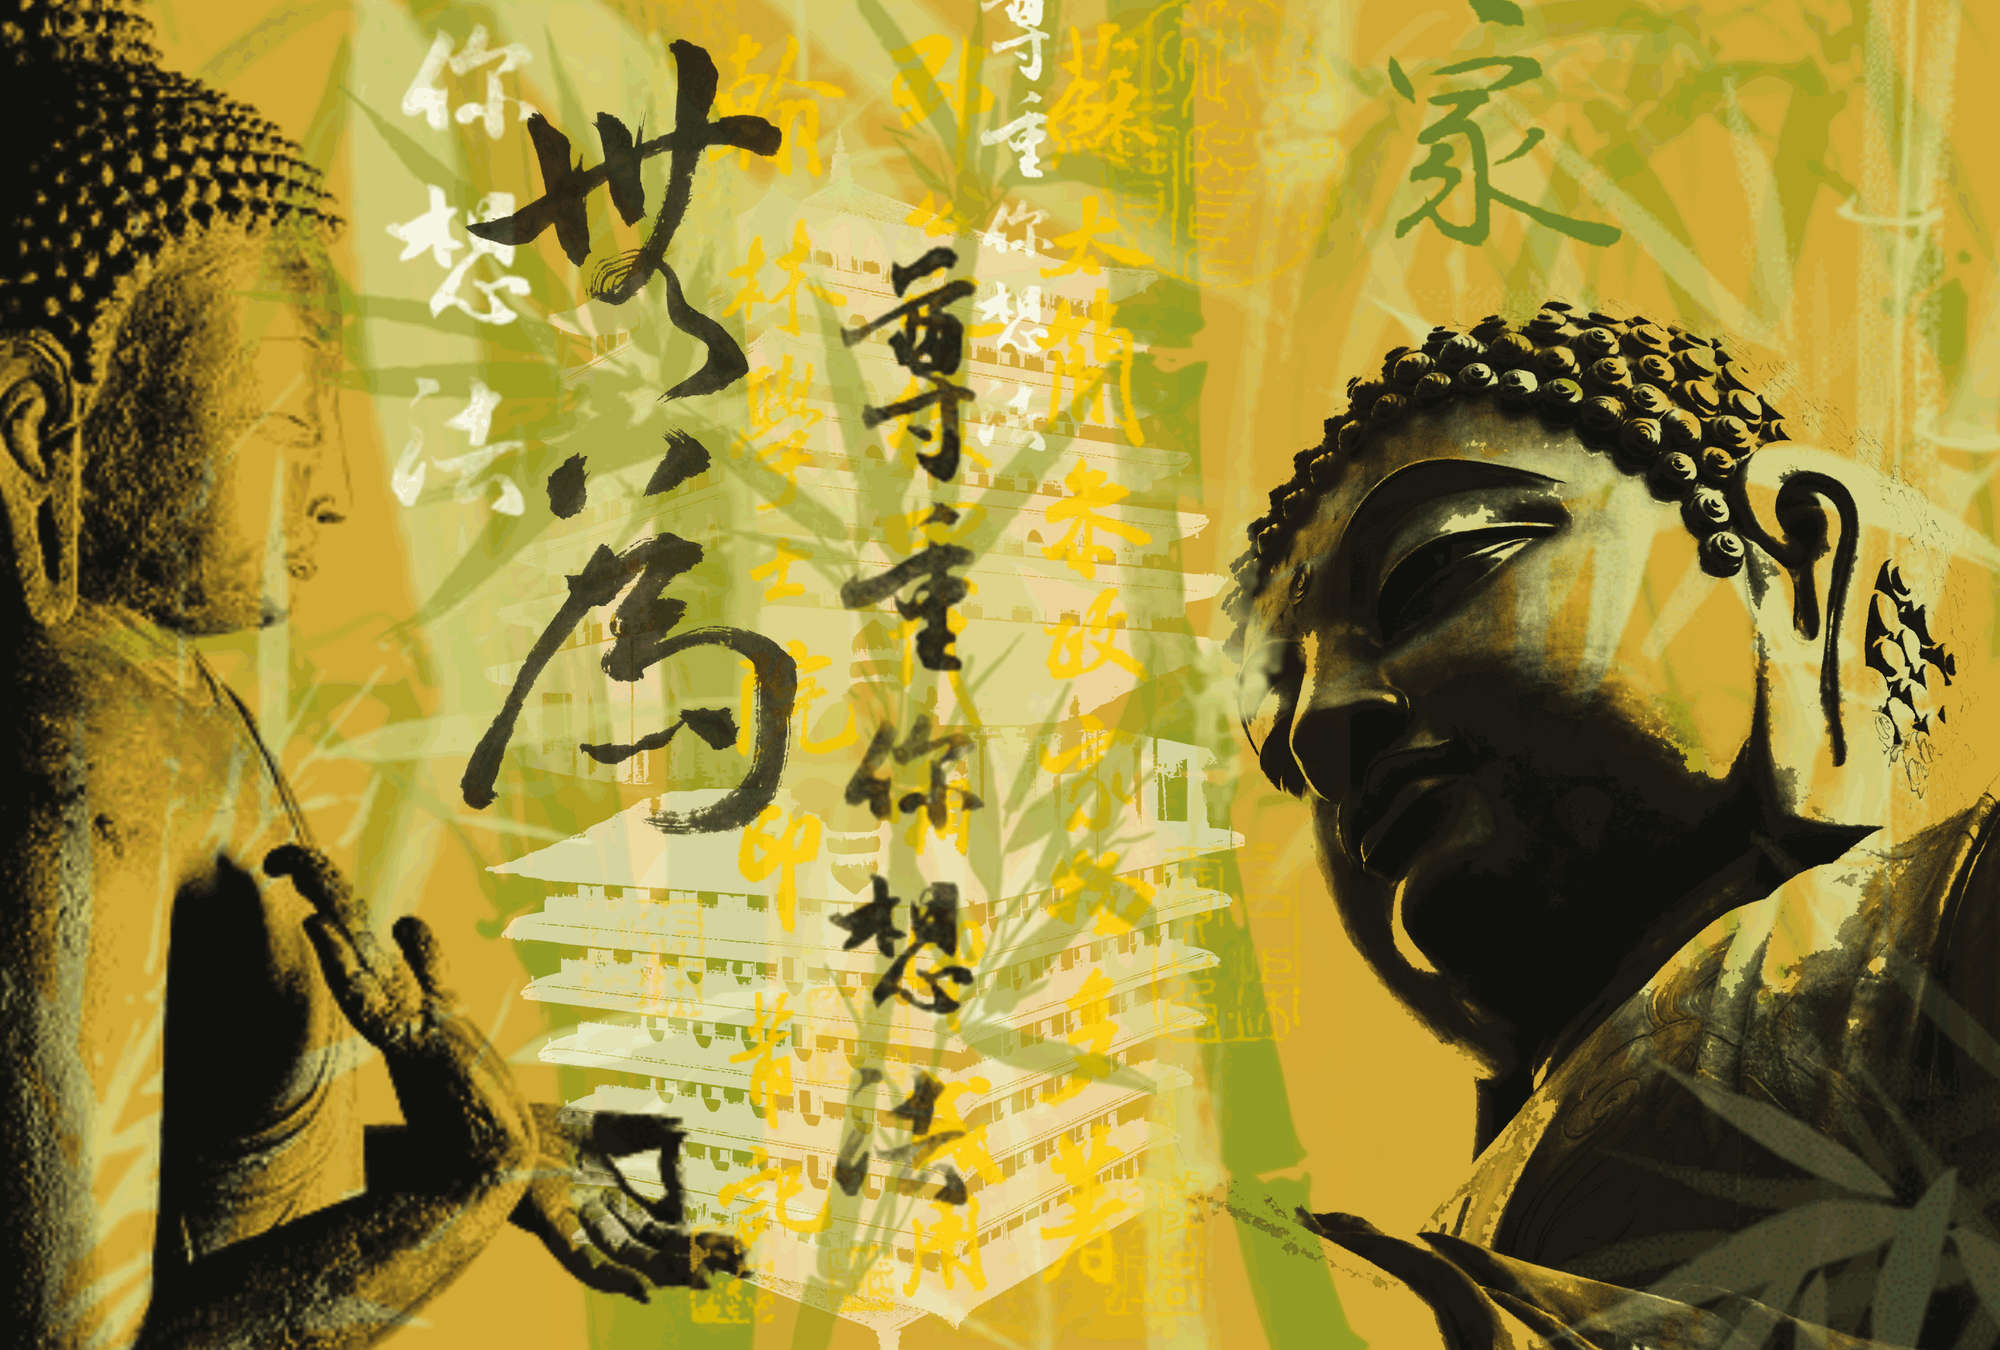             Buddha murale in stile Asian Fusion
        